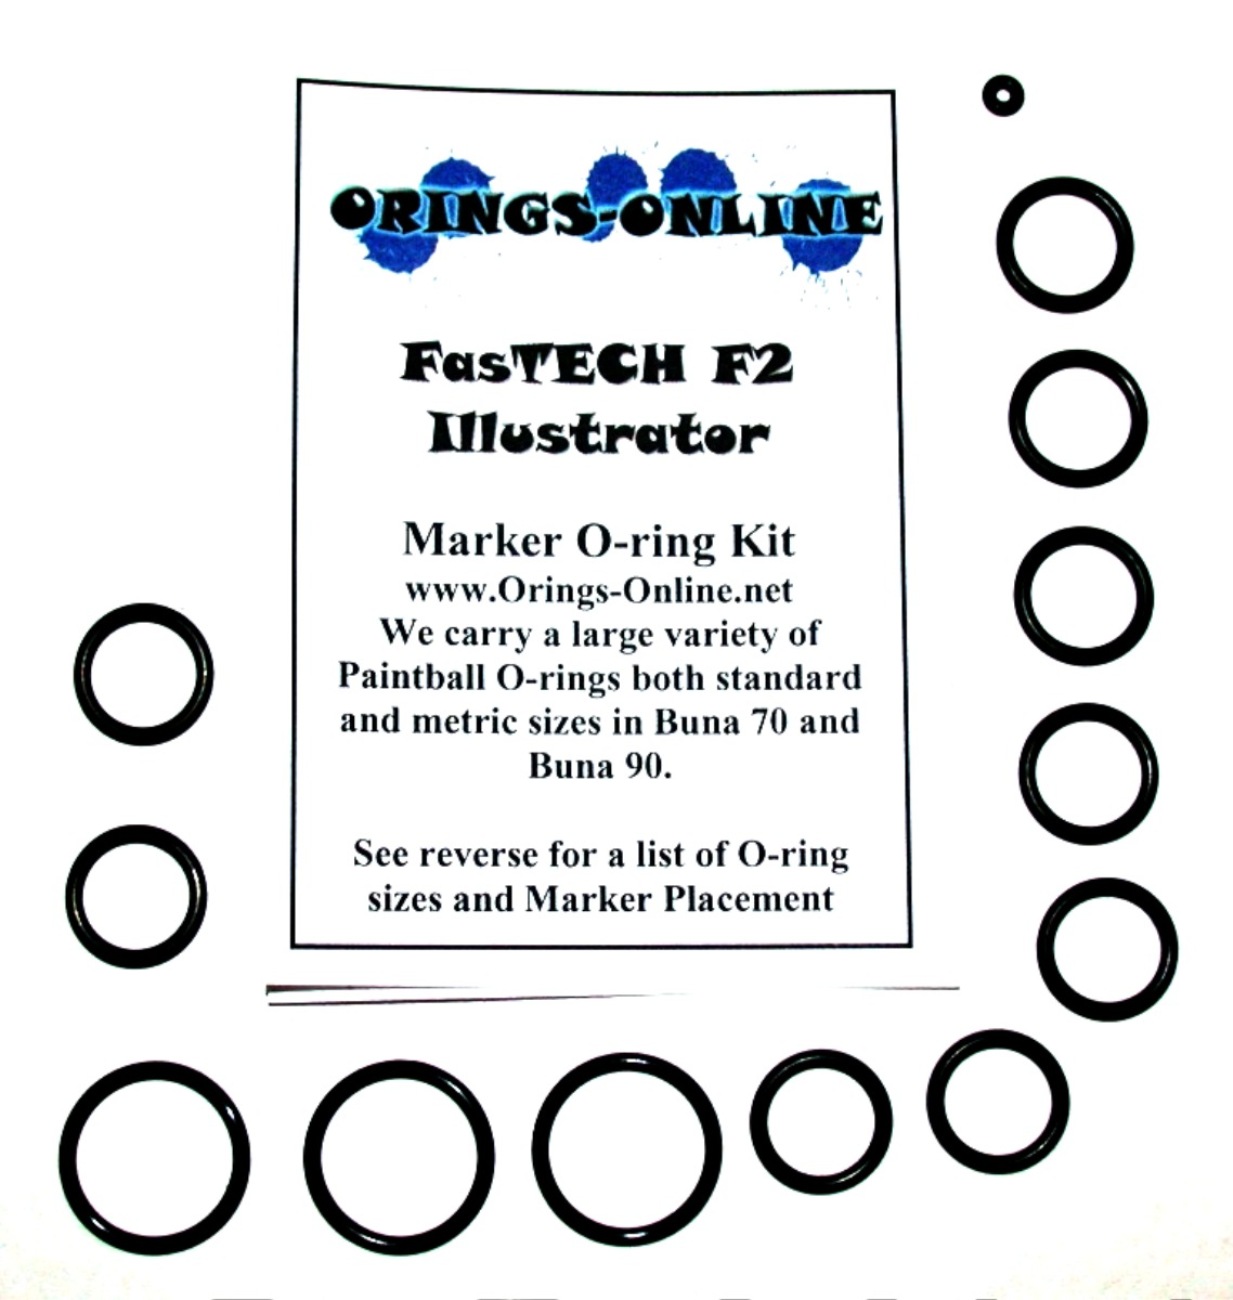 Fastech F2 Illustrator Marker O-ring Kit